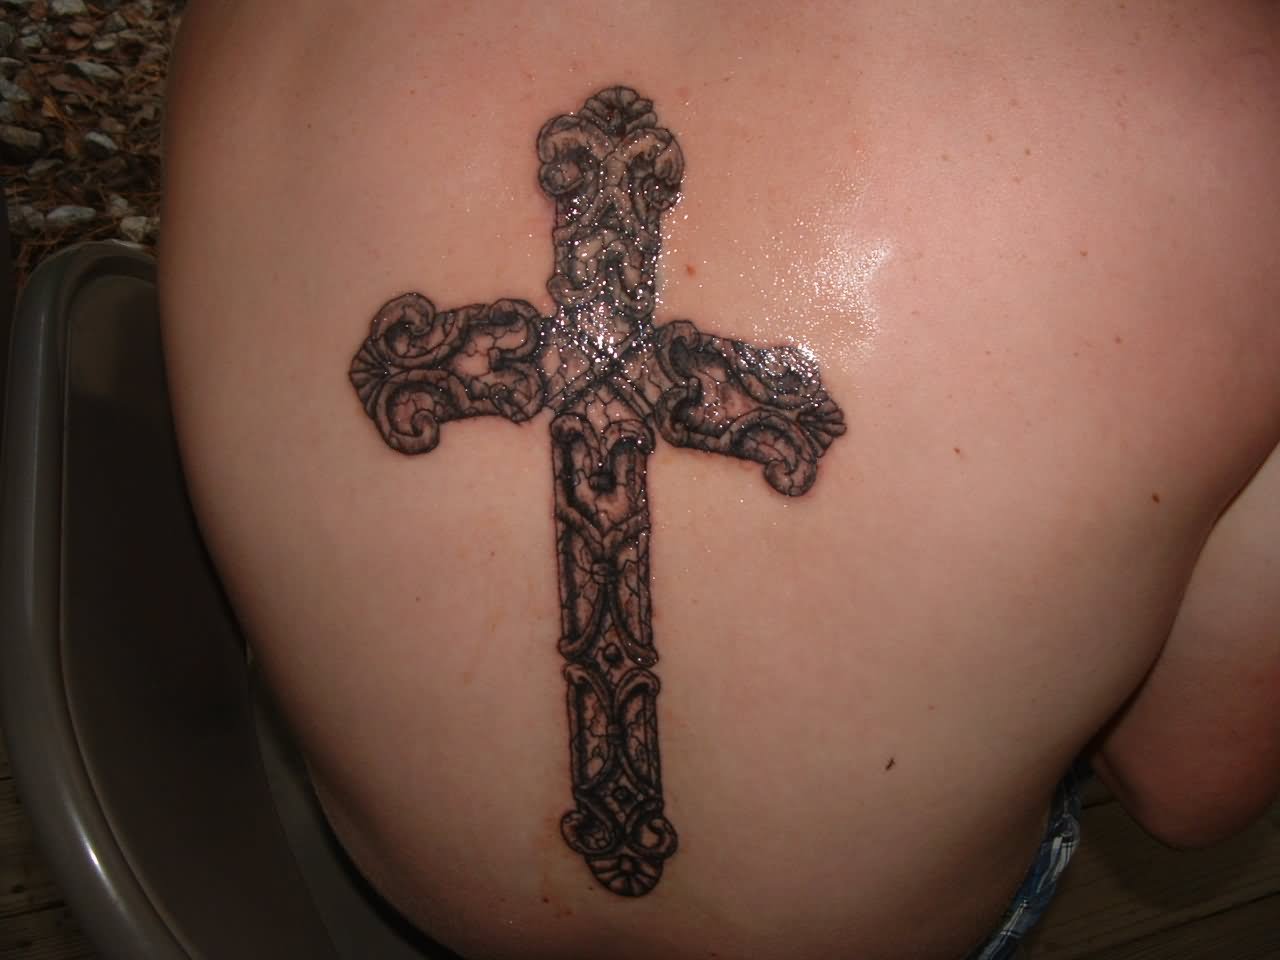 Freshly healed vintage cross tattoo on back